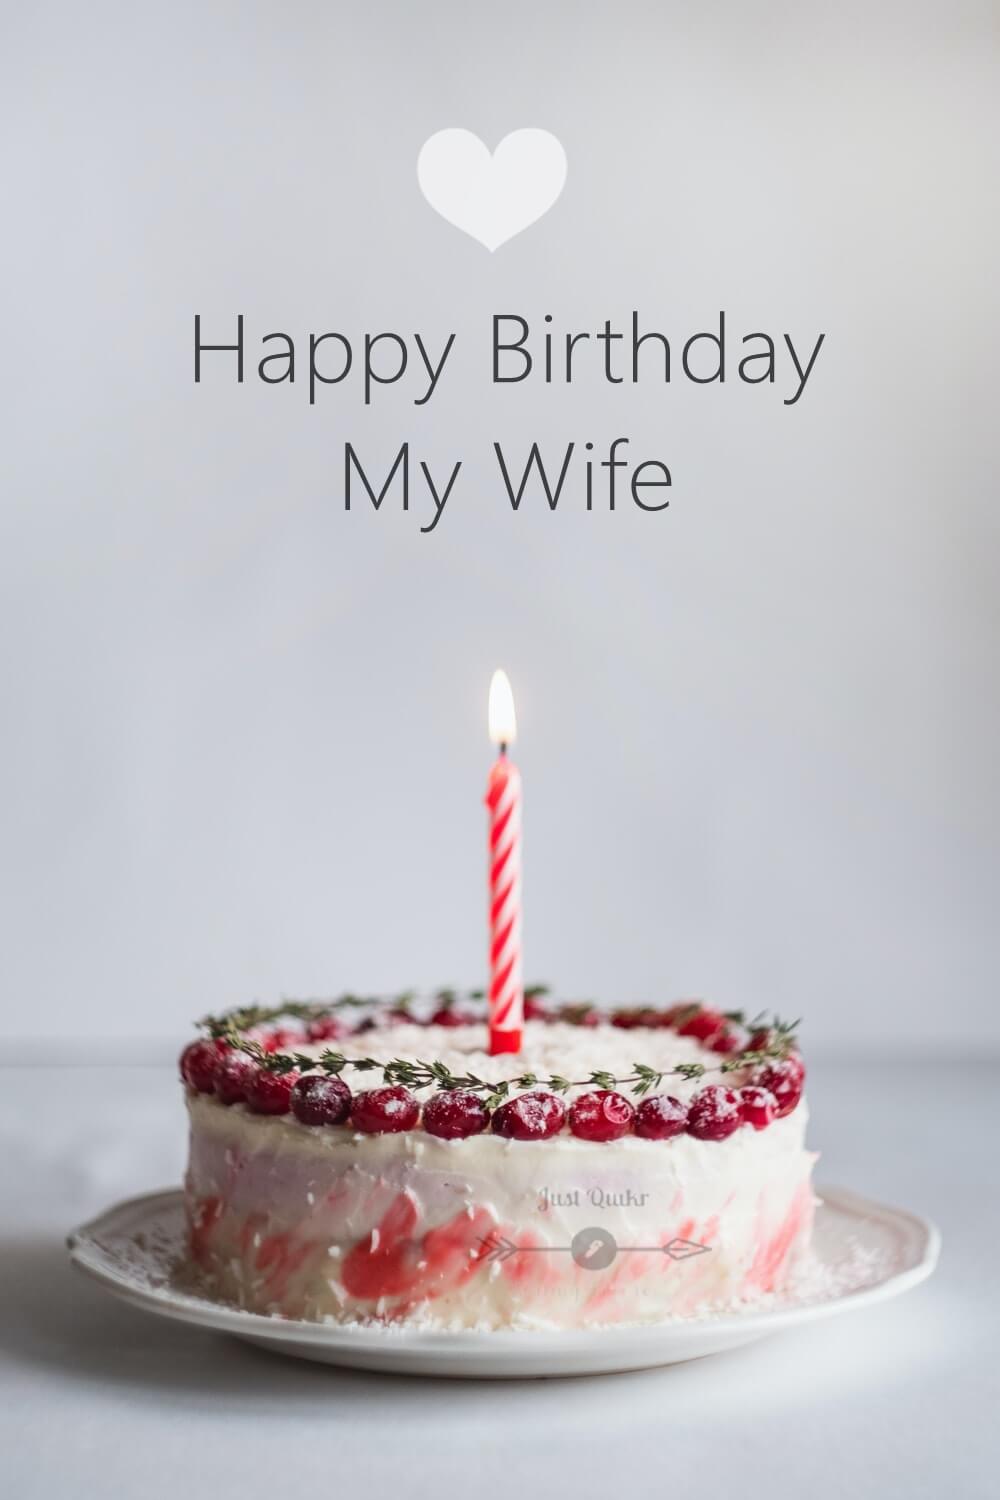 Happy Birthday Shayari HD Pics Image for Wife in Punjabi